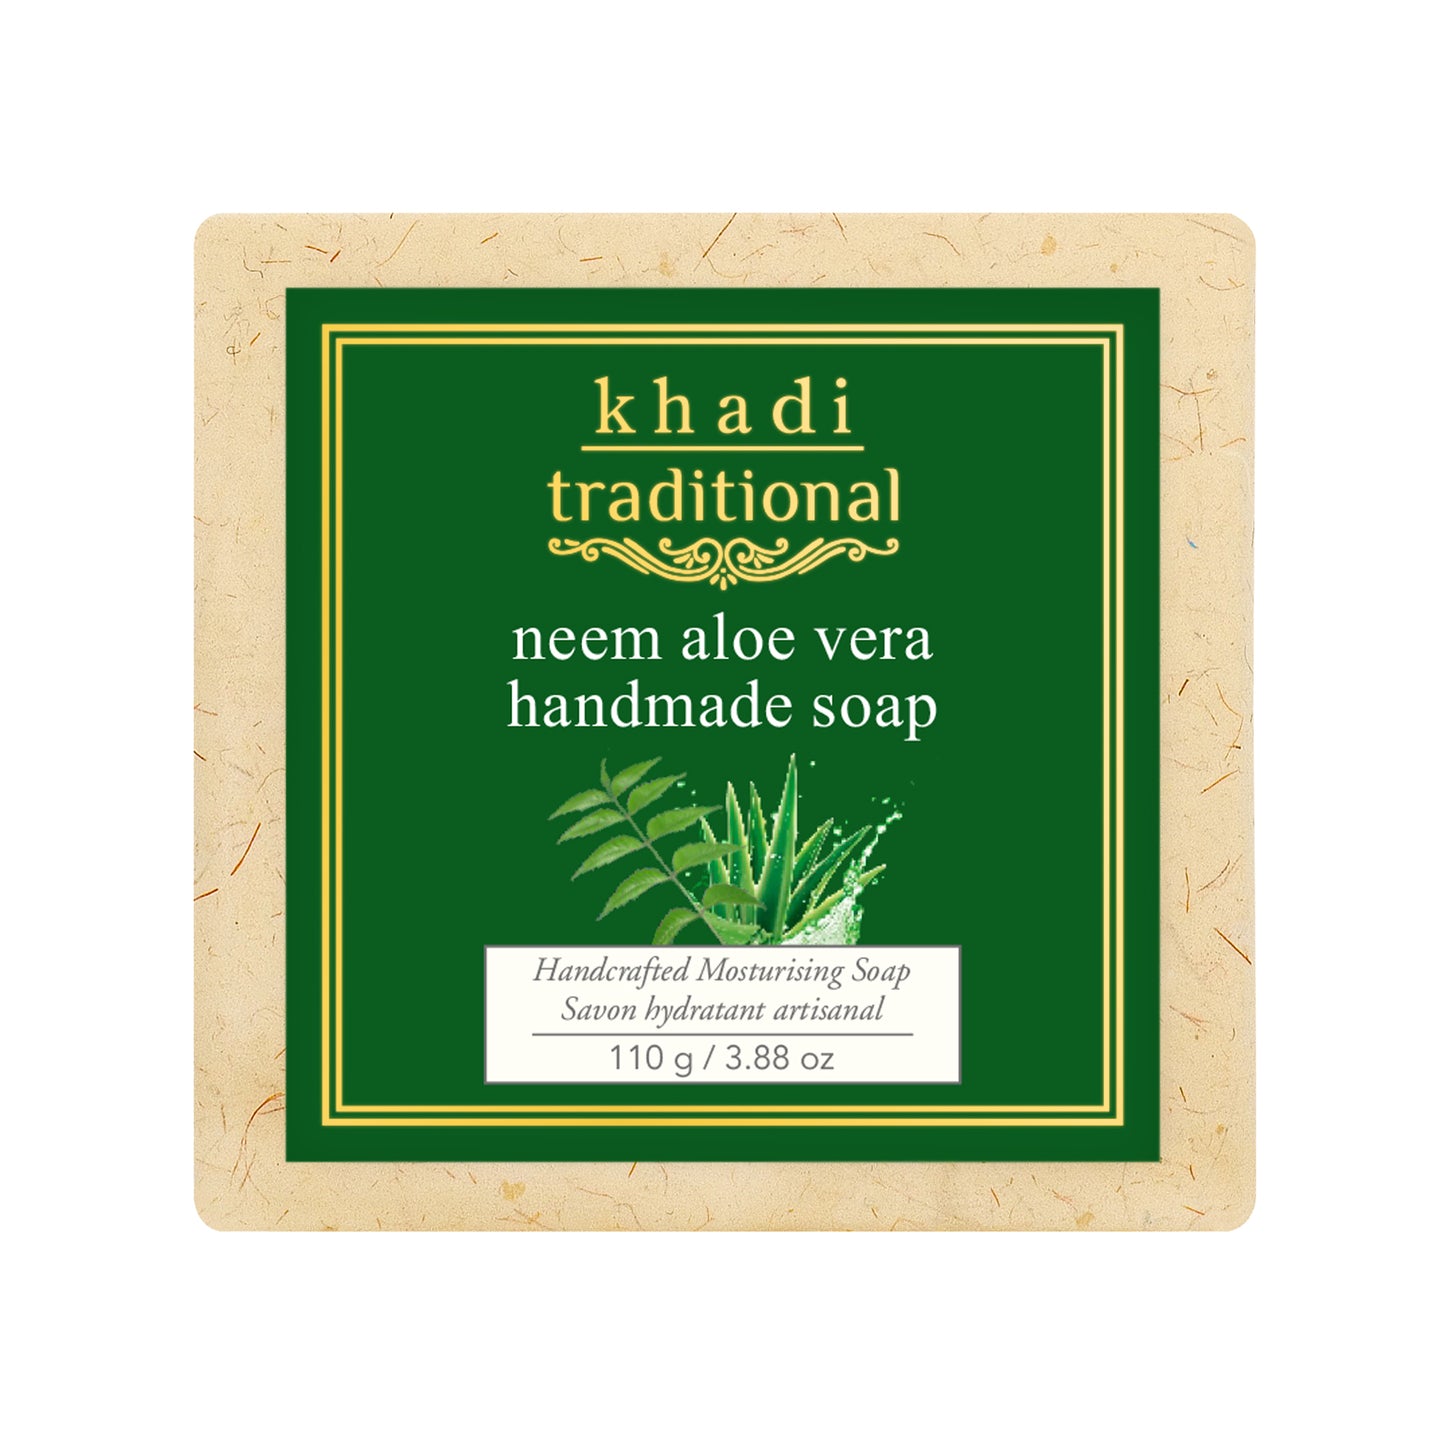 Neem Aloe Vera Handmade Soap